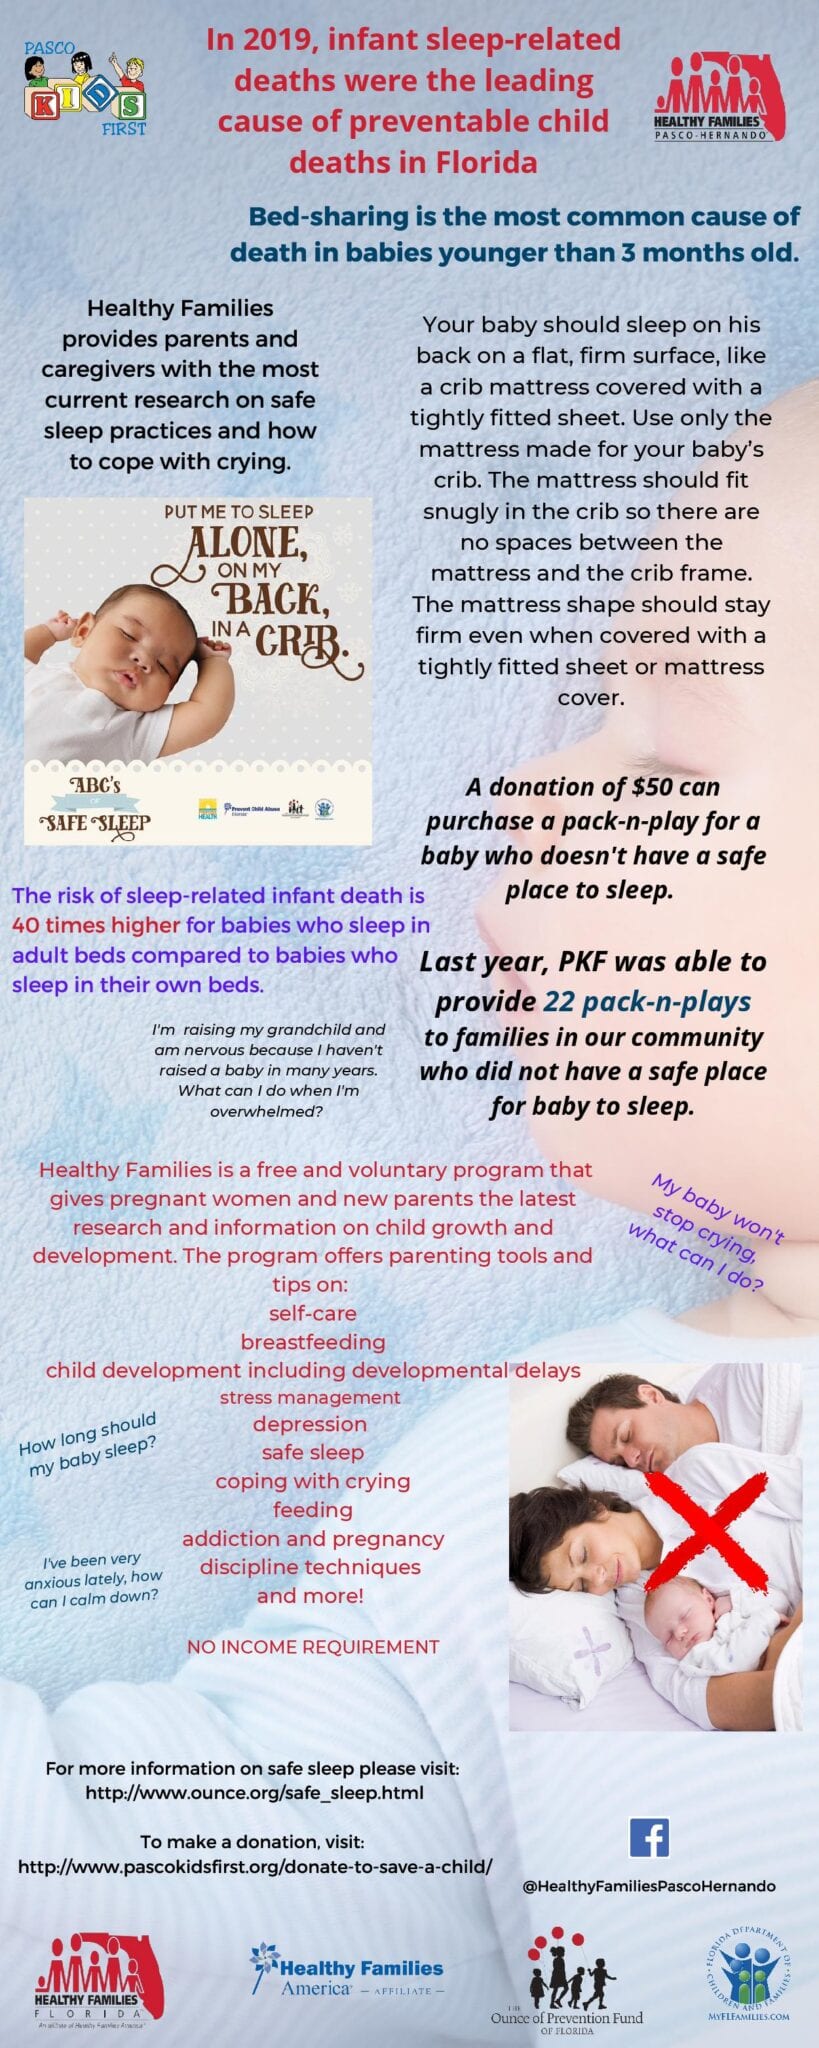 Importance of Safe Sleep Education